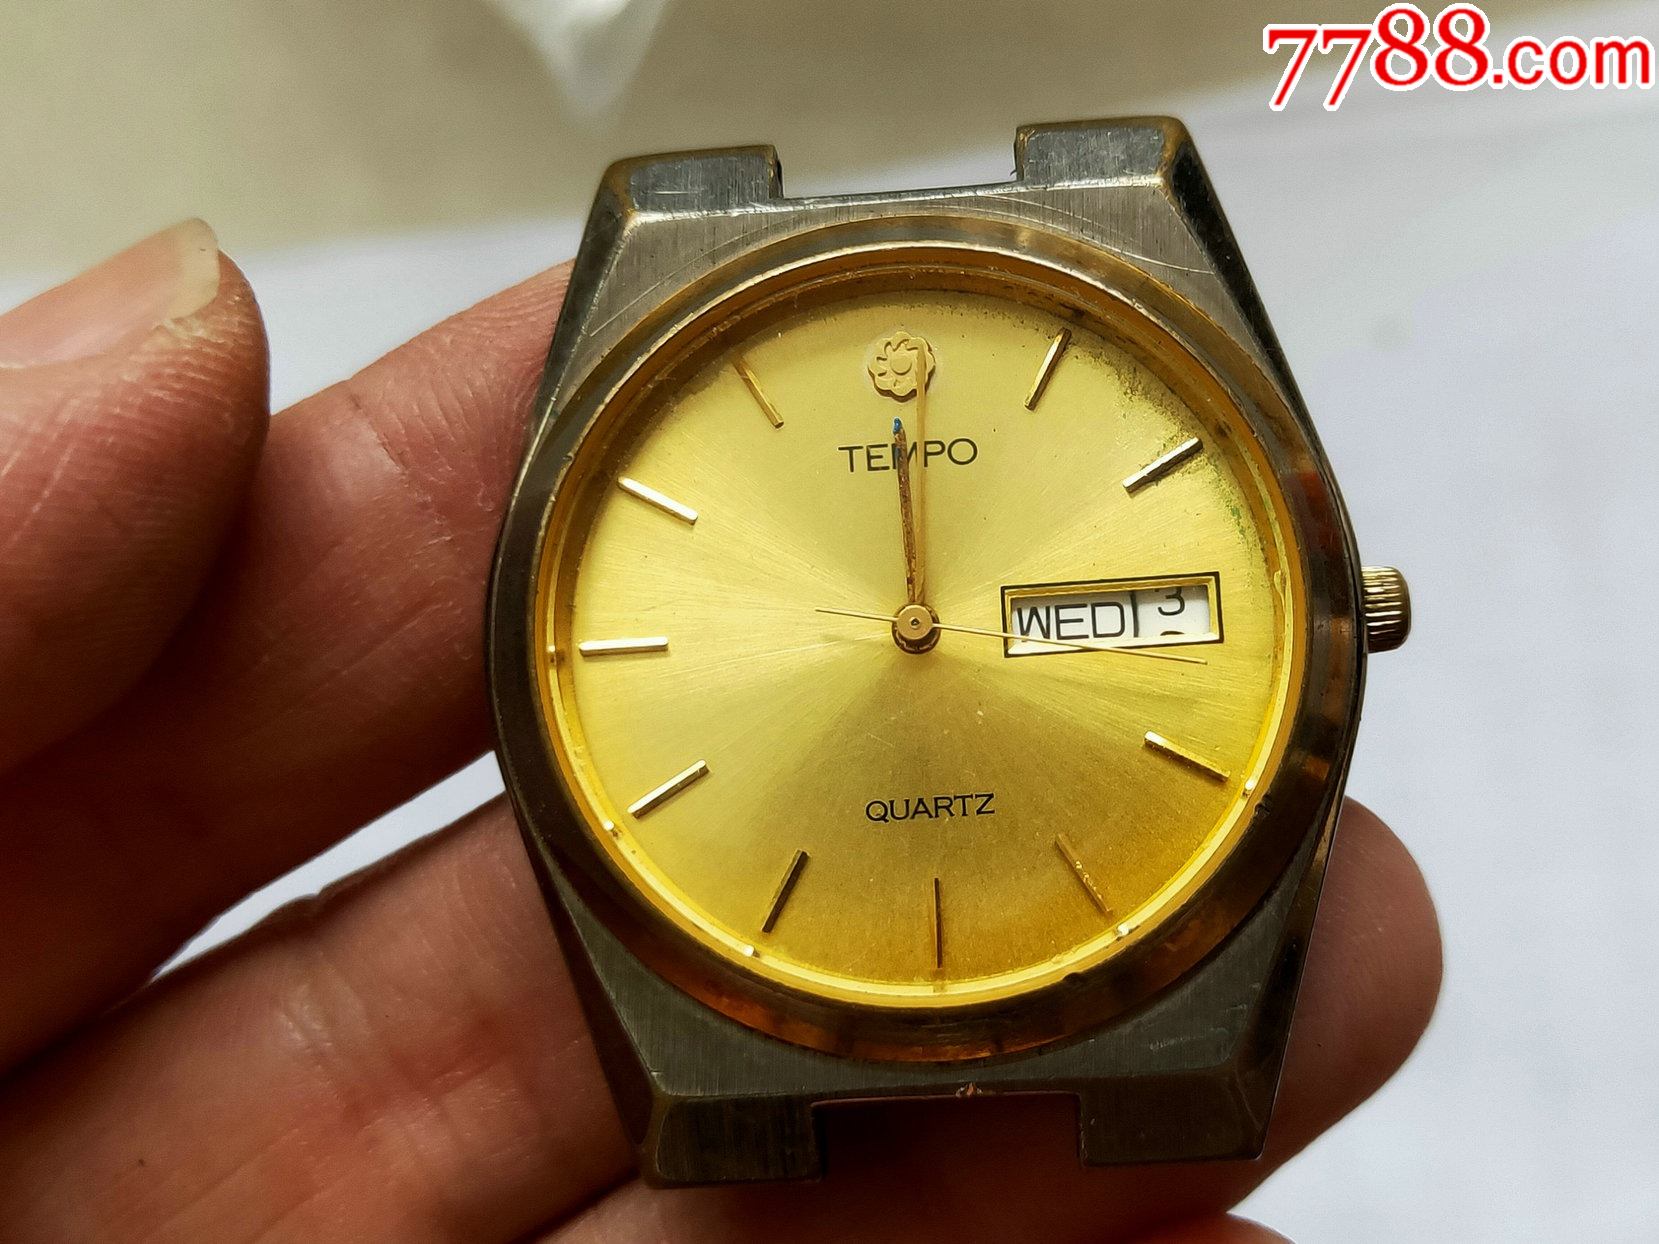 tempo石英表出售-价格:30元-se80846144-手表/腕表